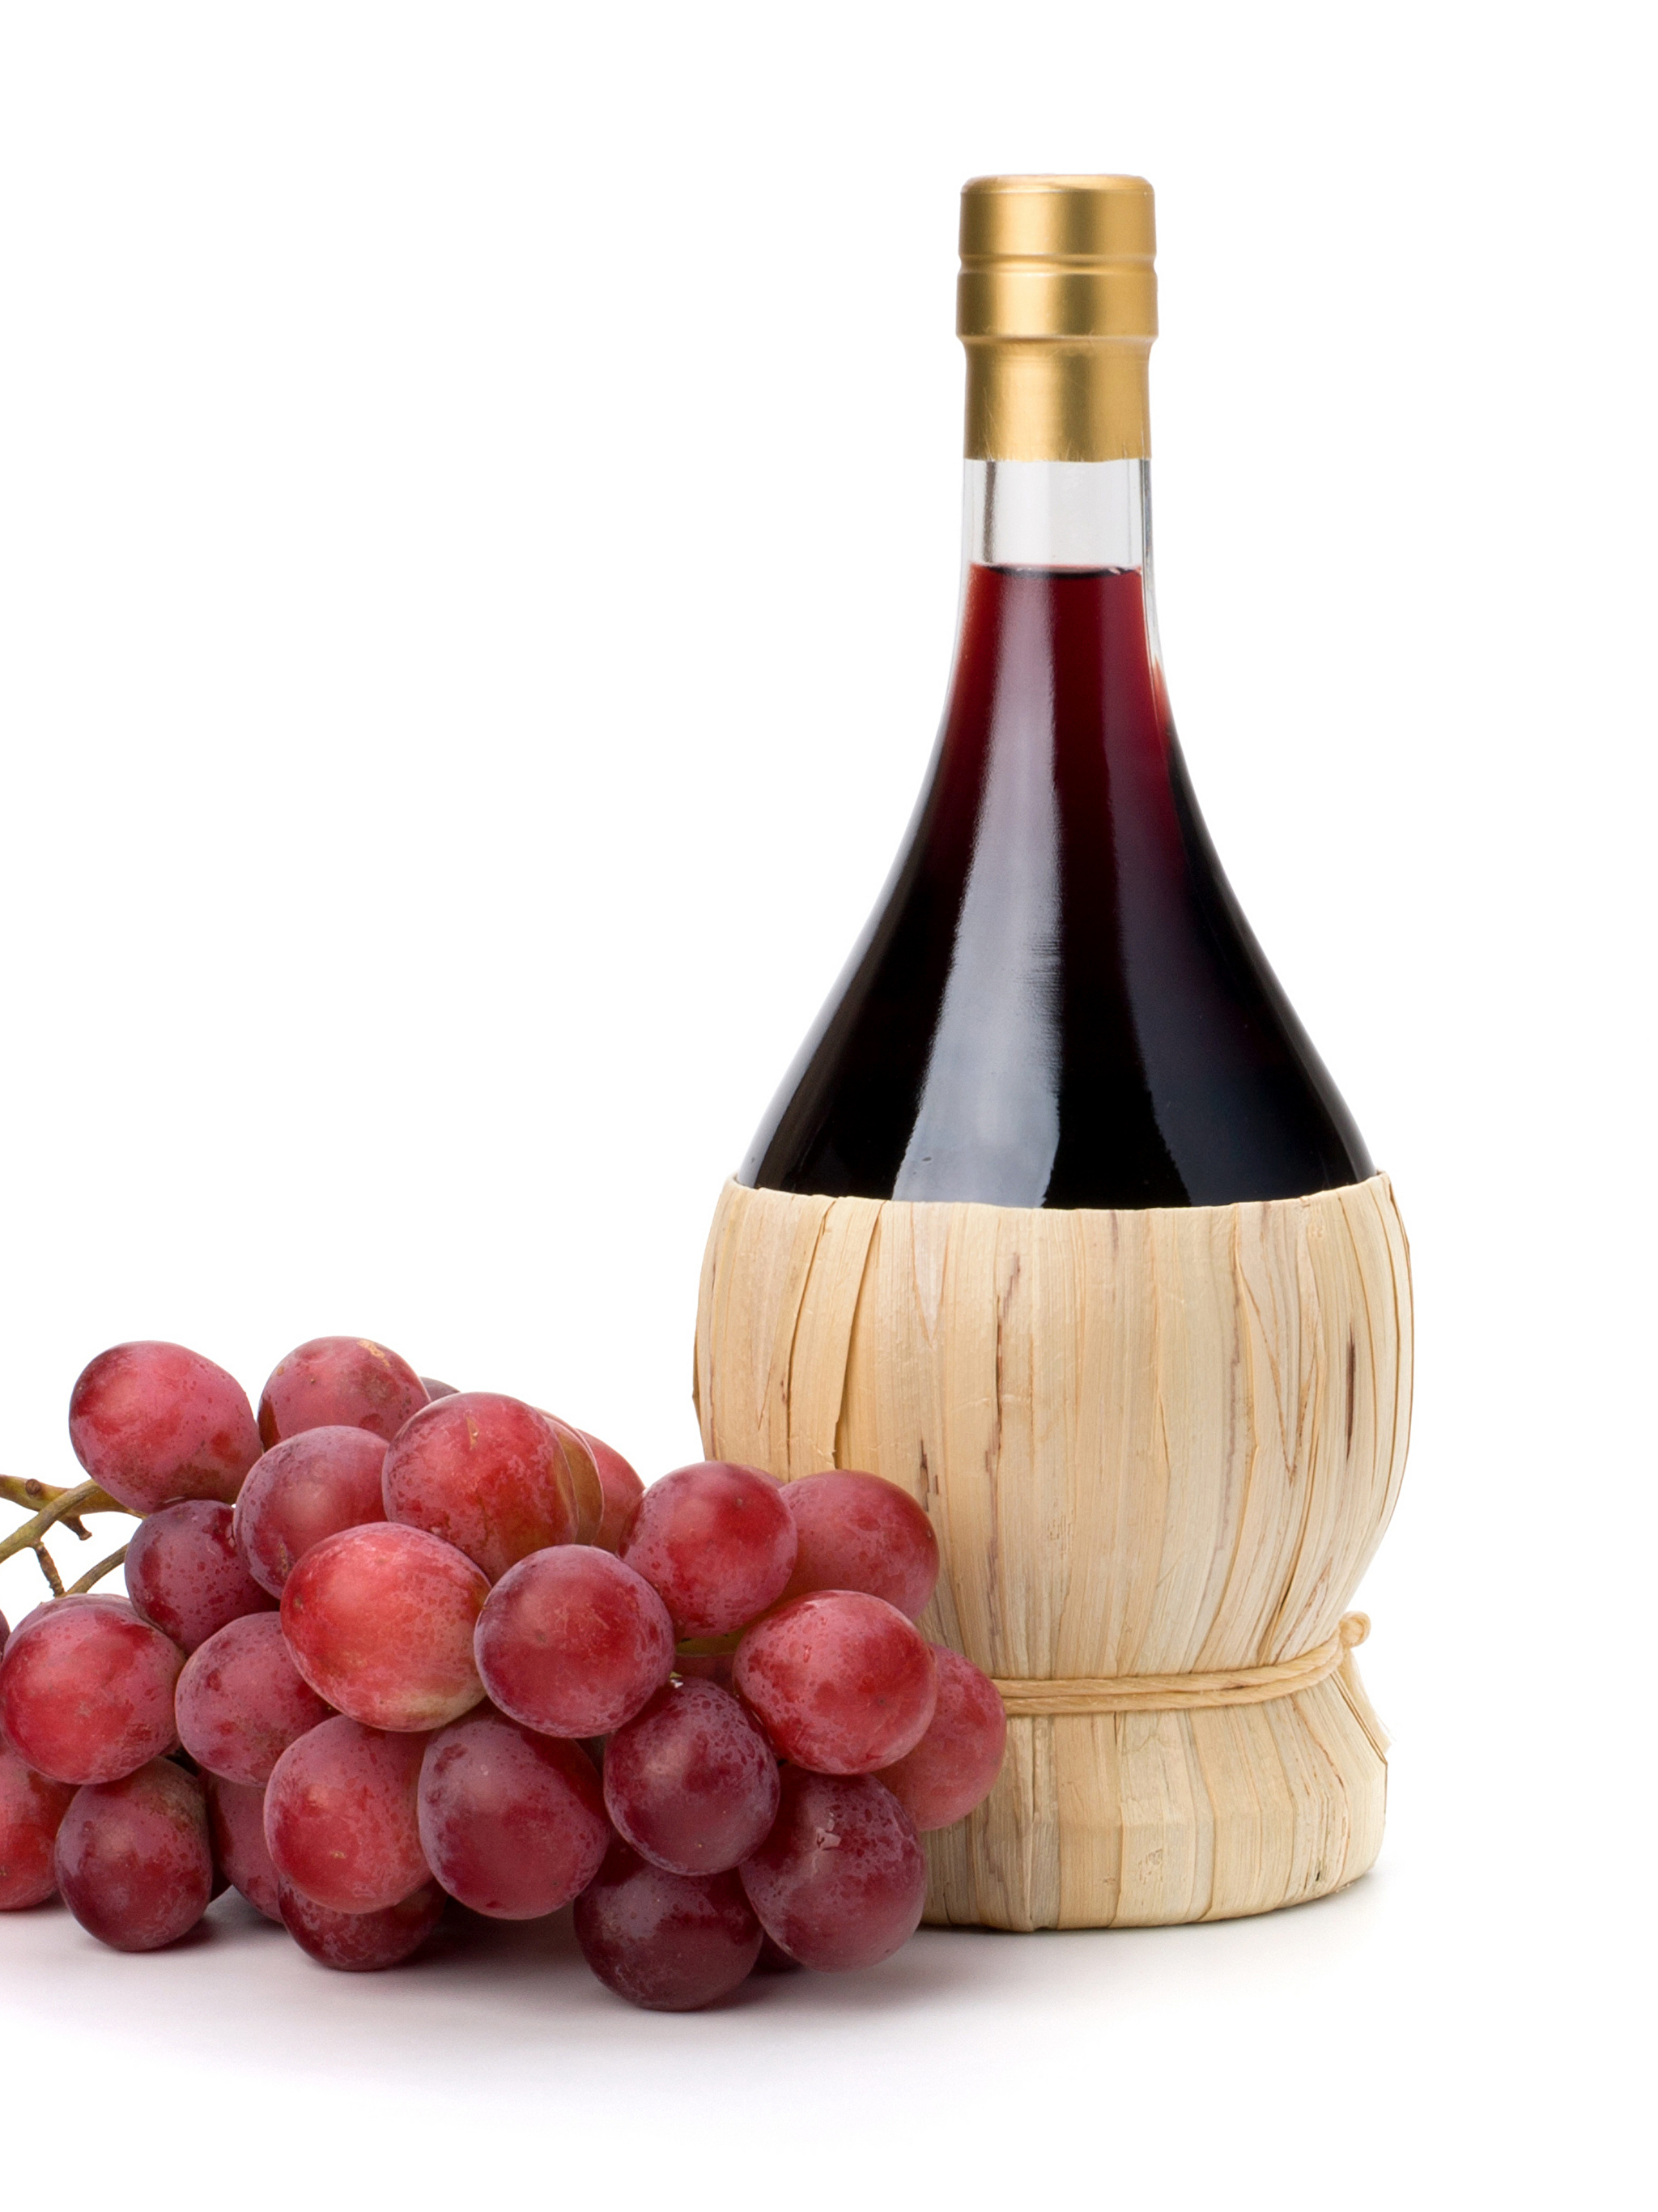 Десертное вино из винограда. Бутылка с вином. Красное вино бутылка. Бутылка вина на белом фоне. Вино и виноград.